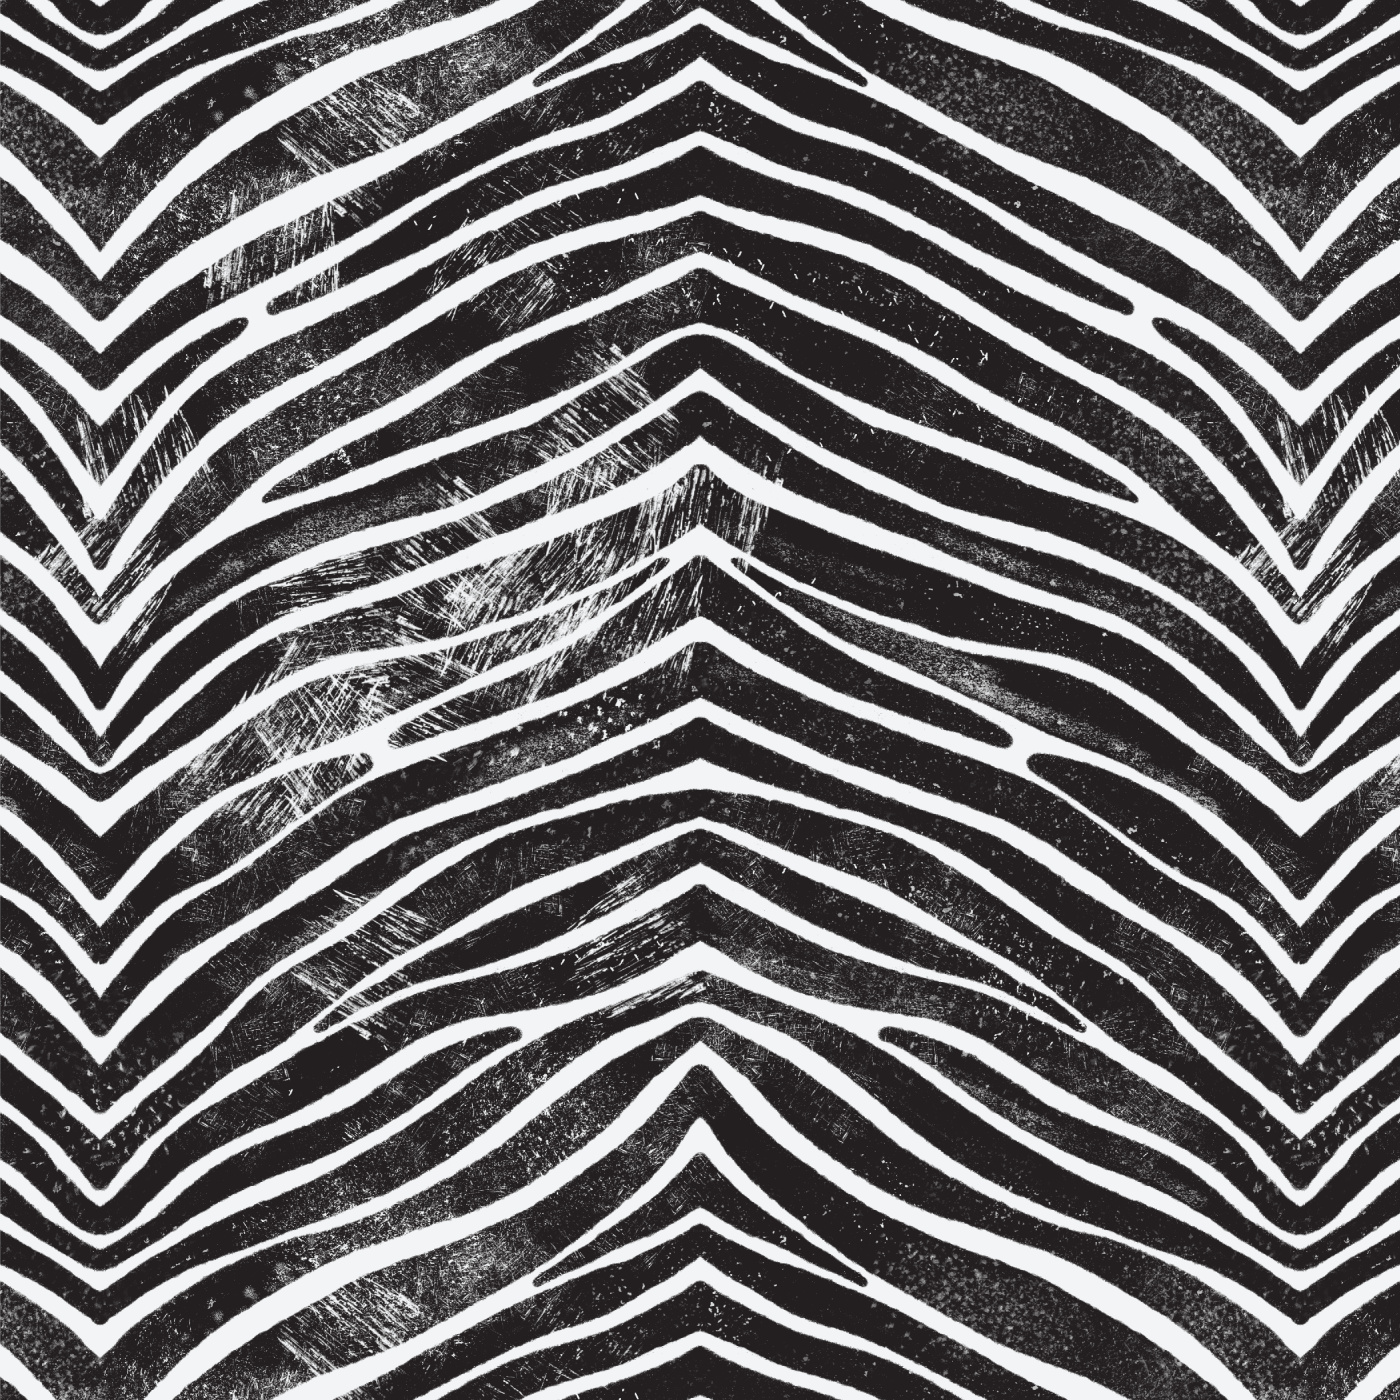 Zebra Crossing Wallpaper